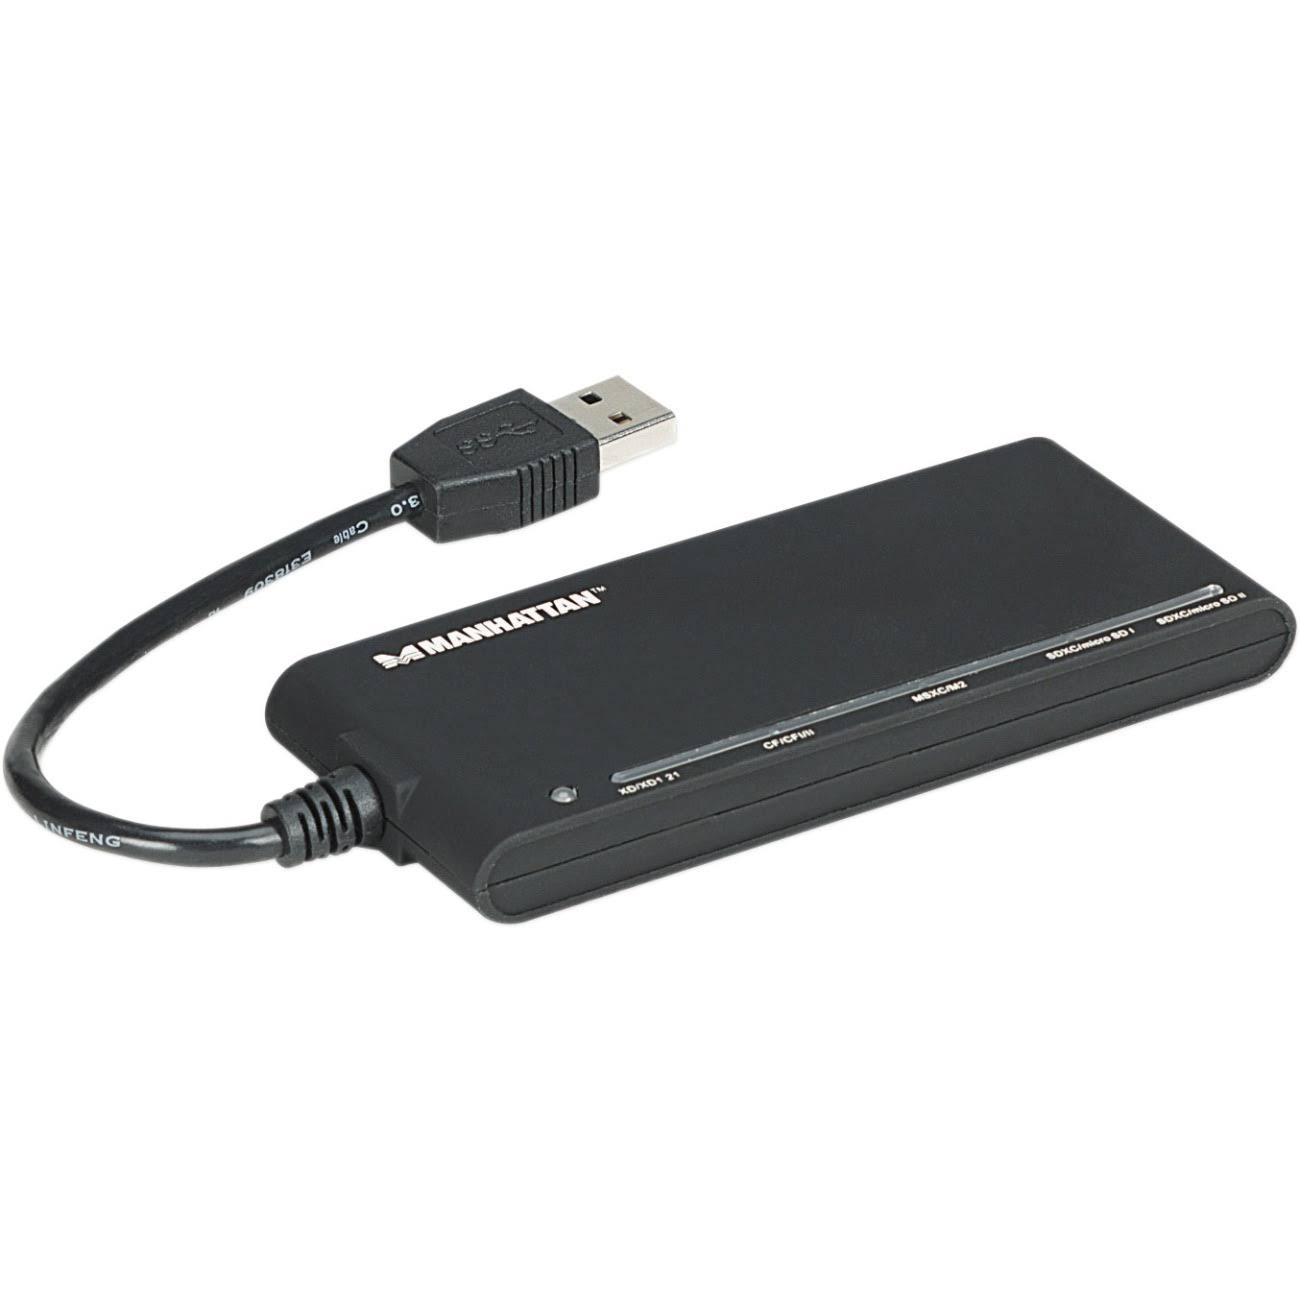 Manhattan SuperSpeed USB 3.0 62-in-1 Multi-card Reader-Writer, Black